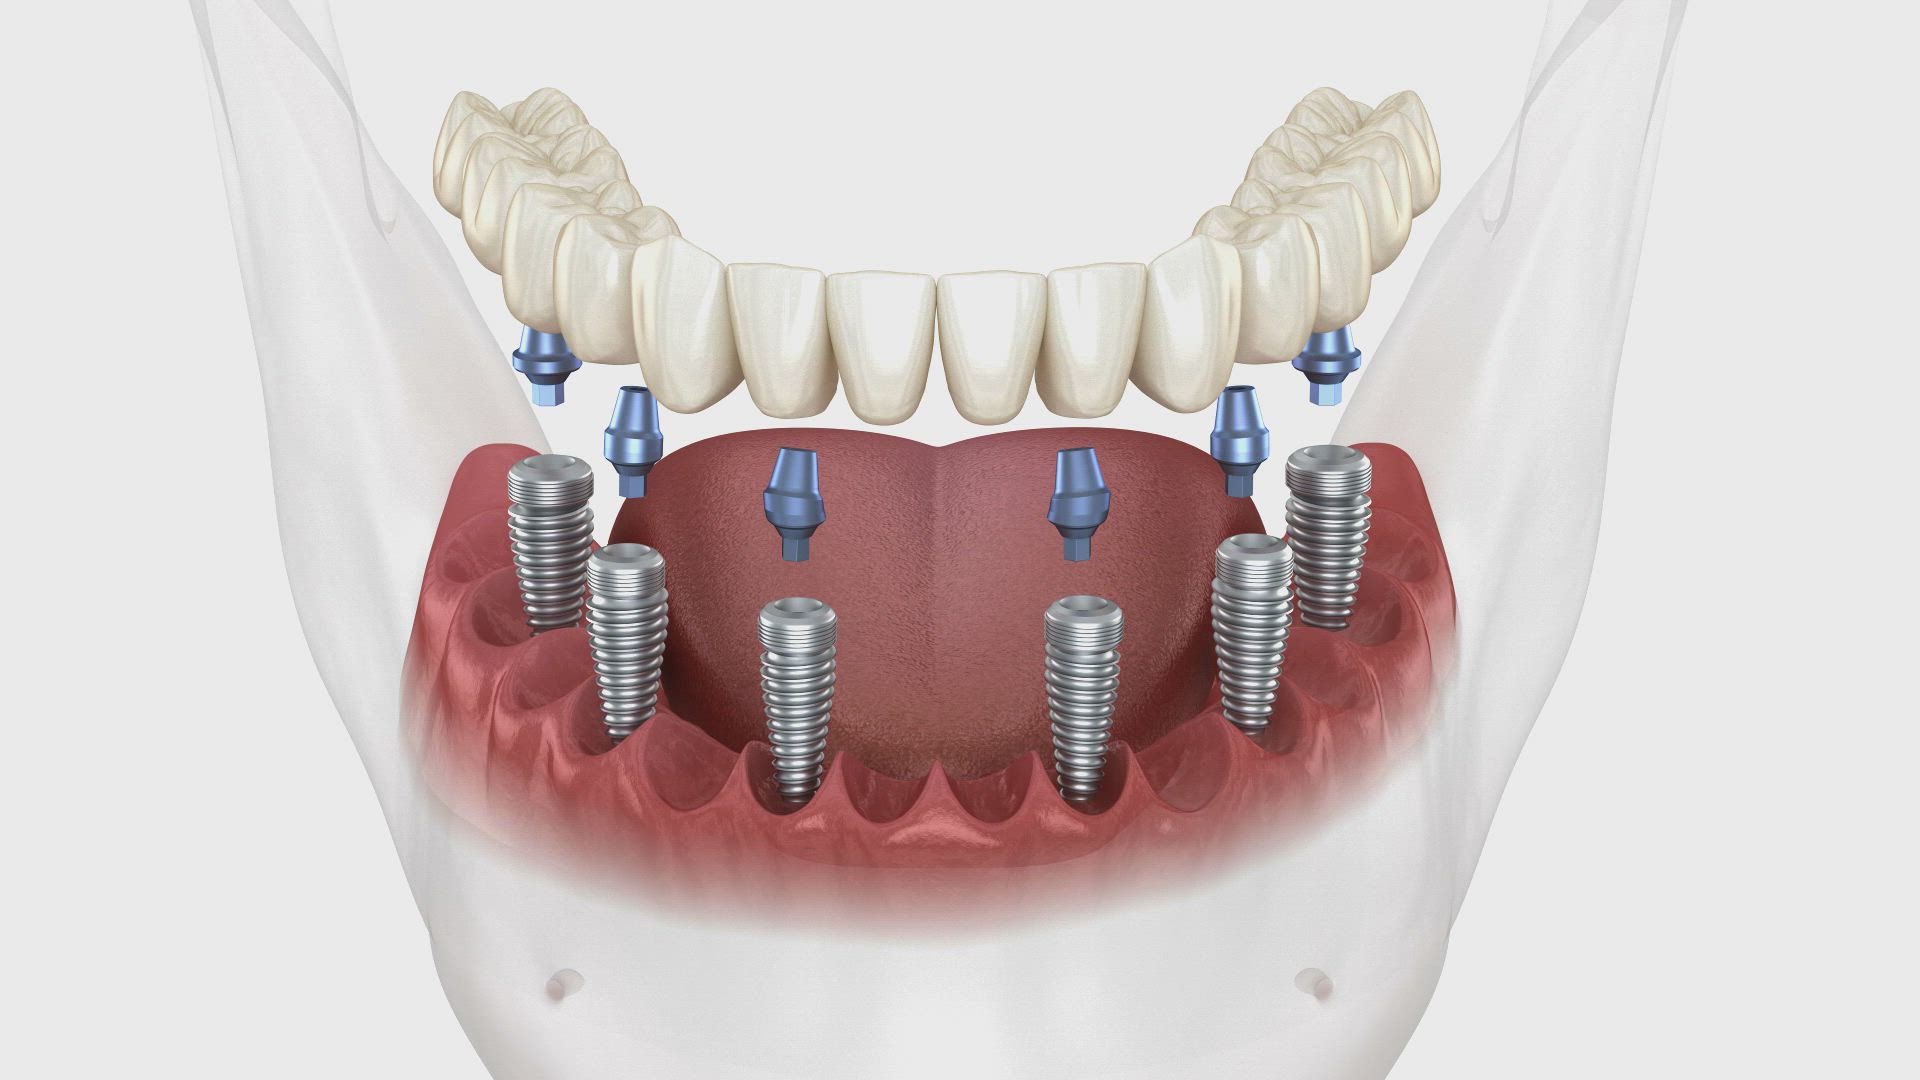 Имплантация зубов all on 6. Имплантация зубов на 6 имплантах. Балочная система на 6 имплантатах.